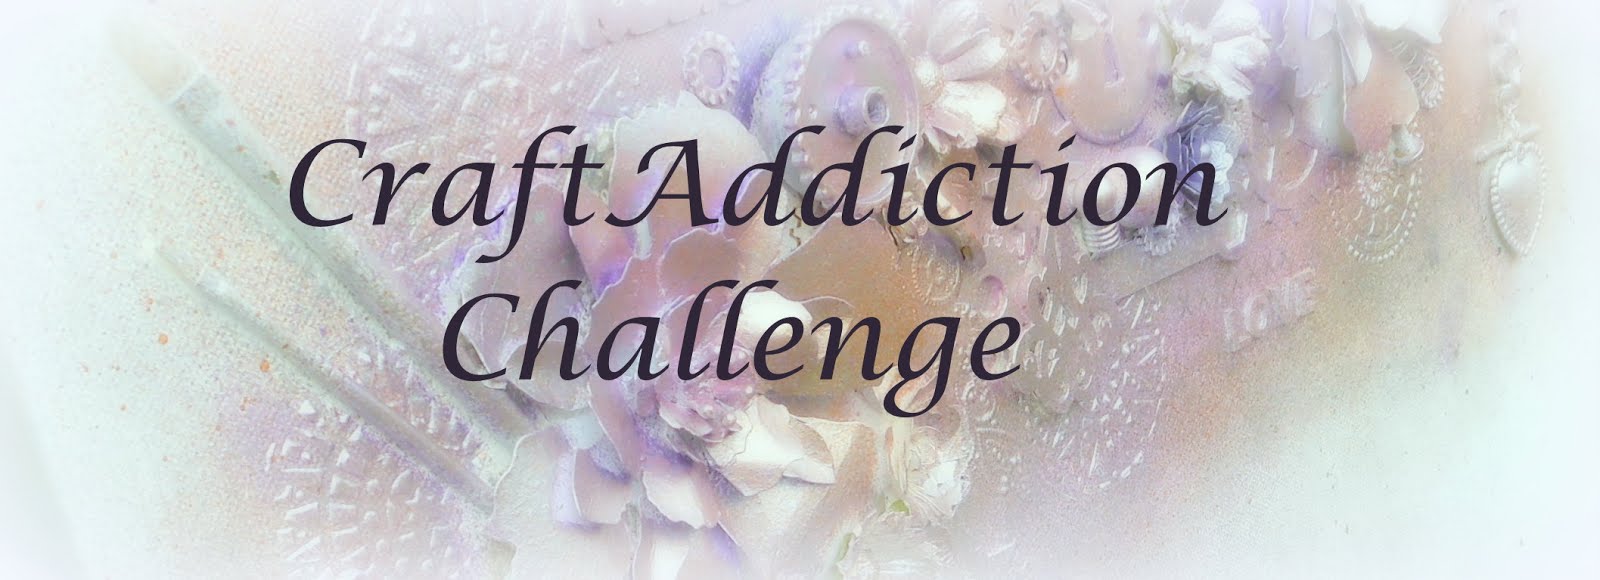 Challenge Craft Addiction